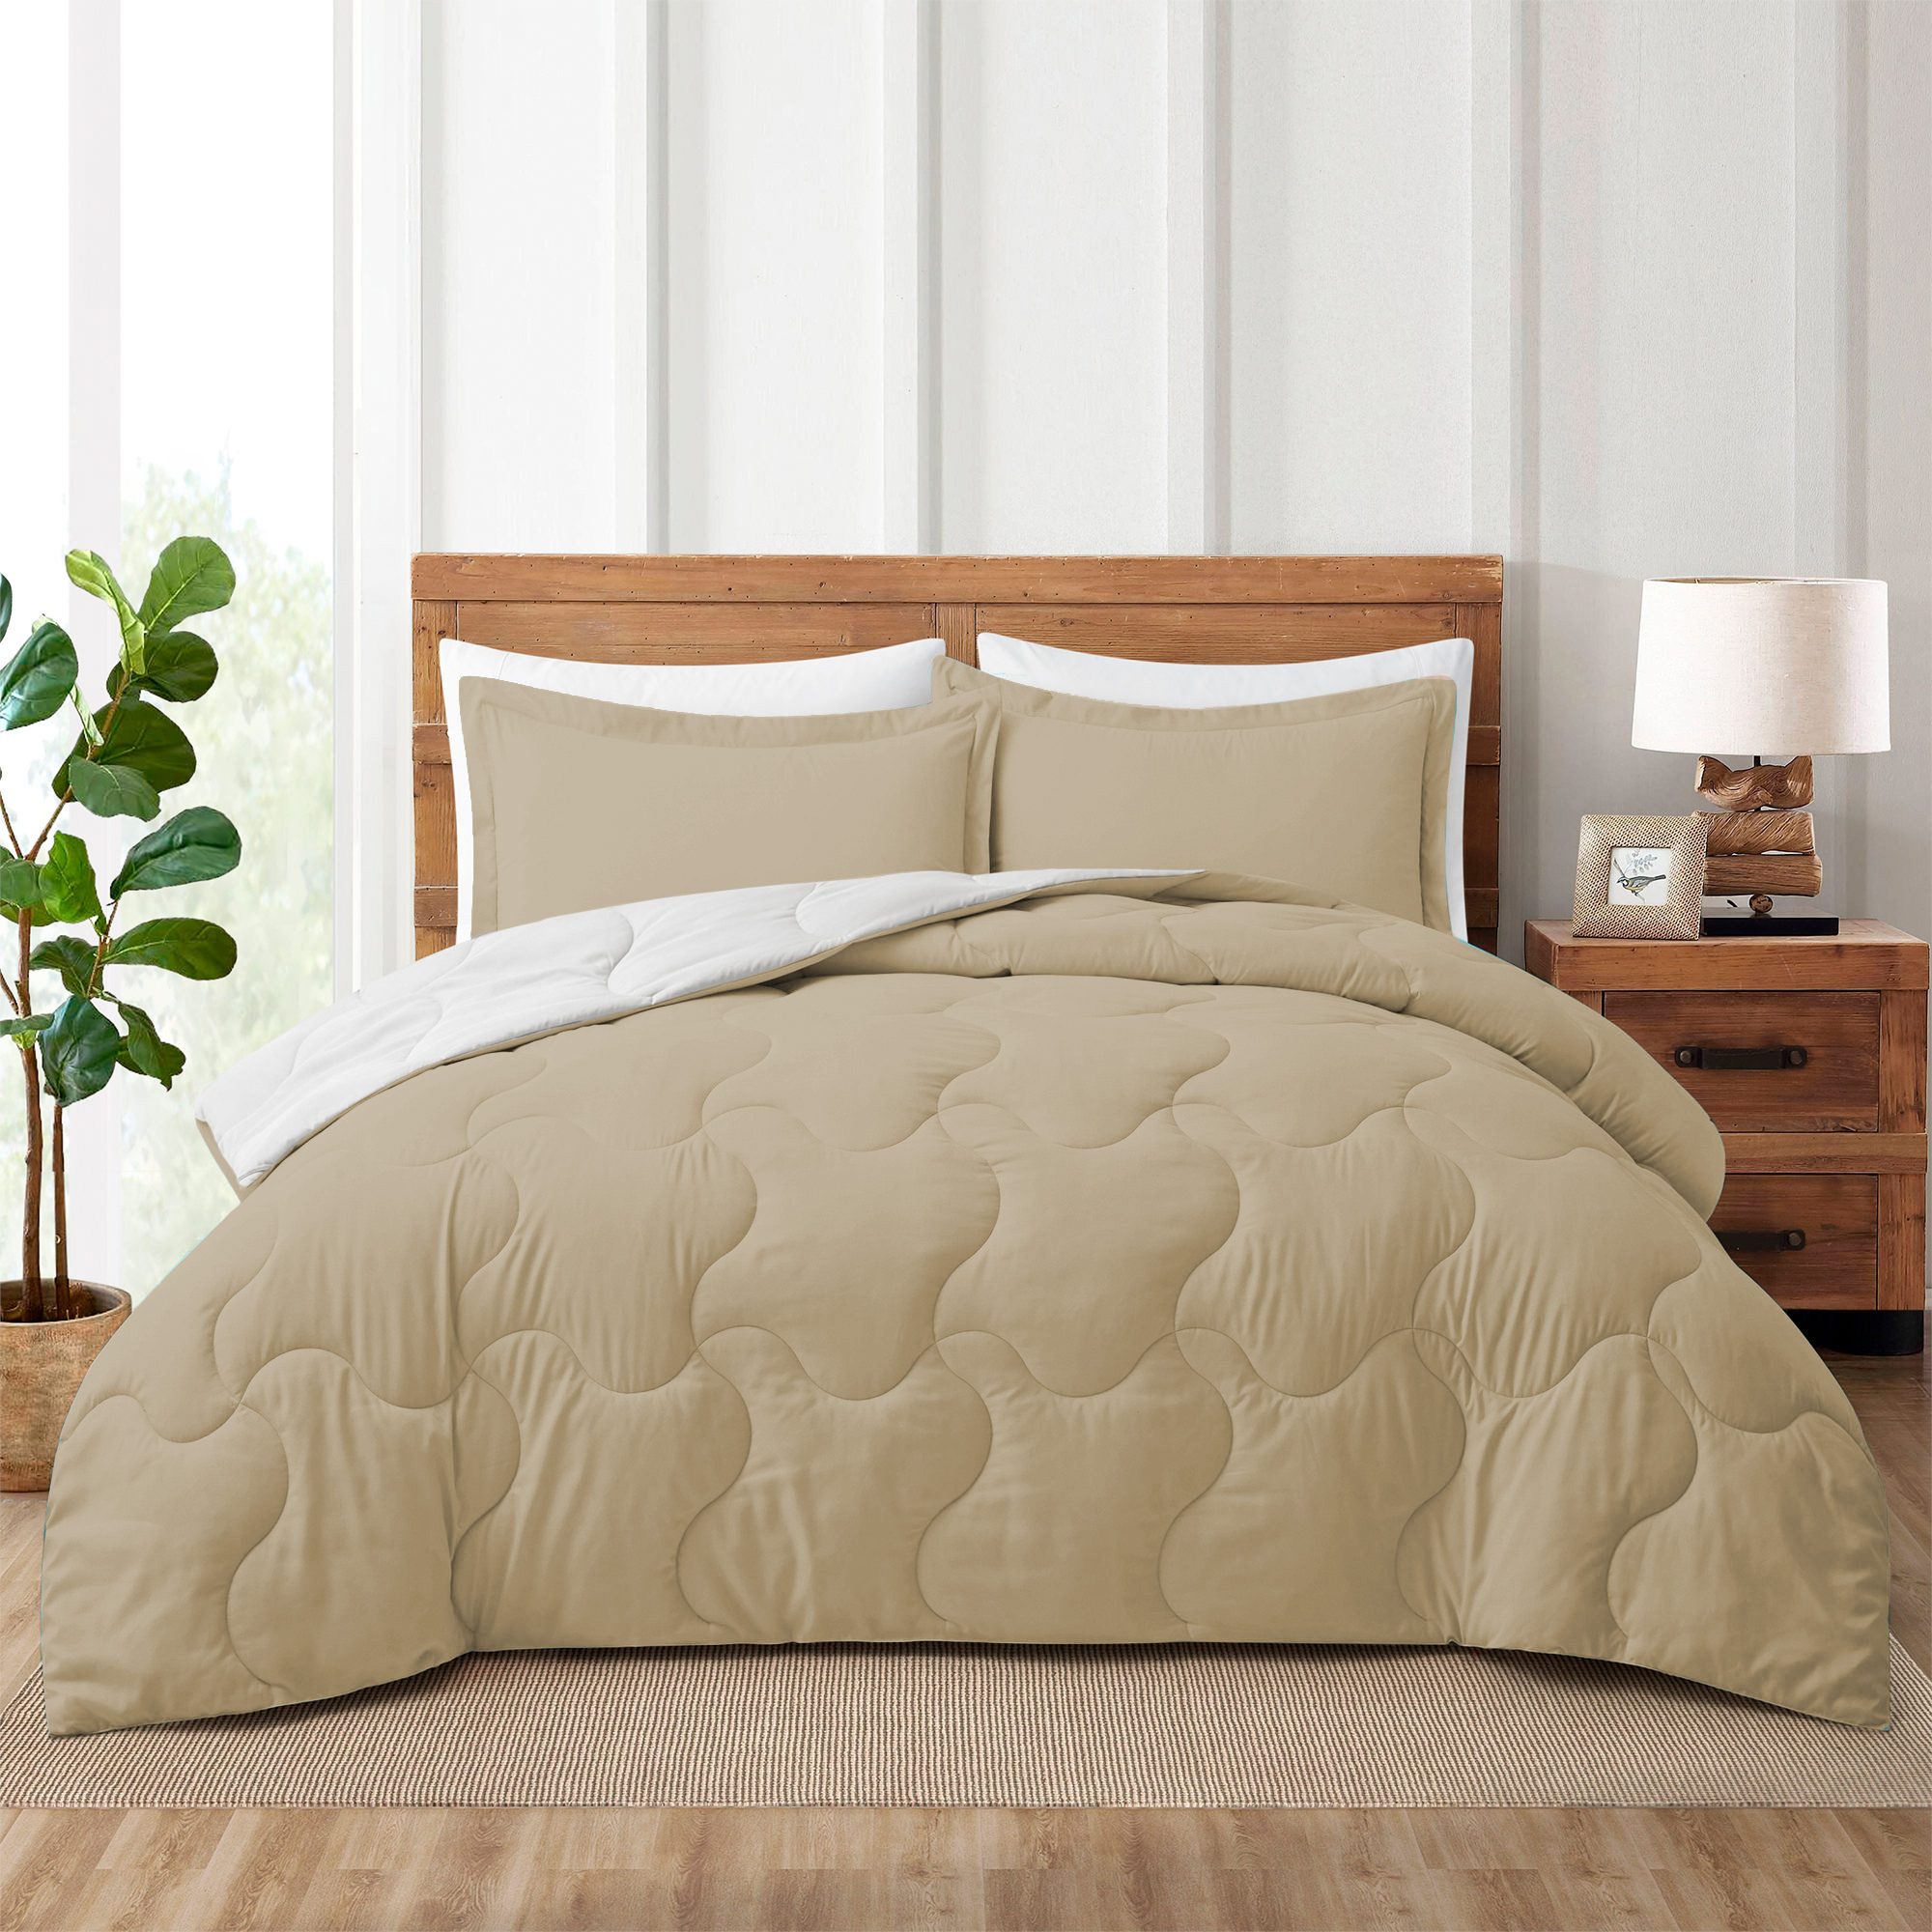 Luxury Reversible Down Alternative Machine Washable Comforter Set With Shams - Twin Size